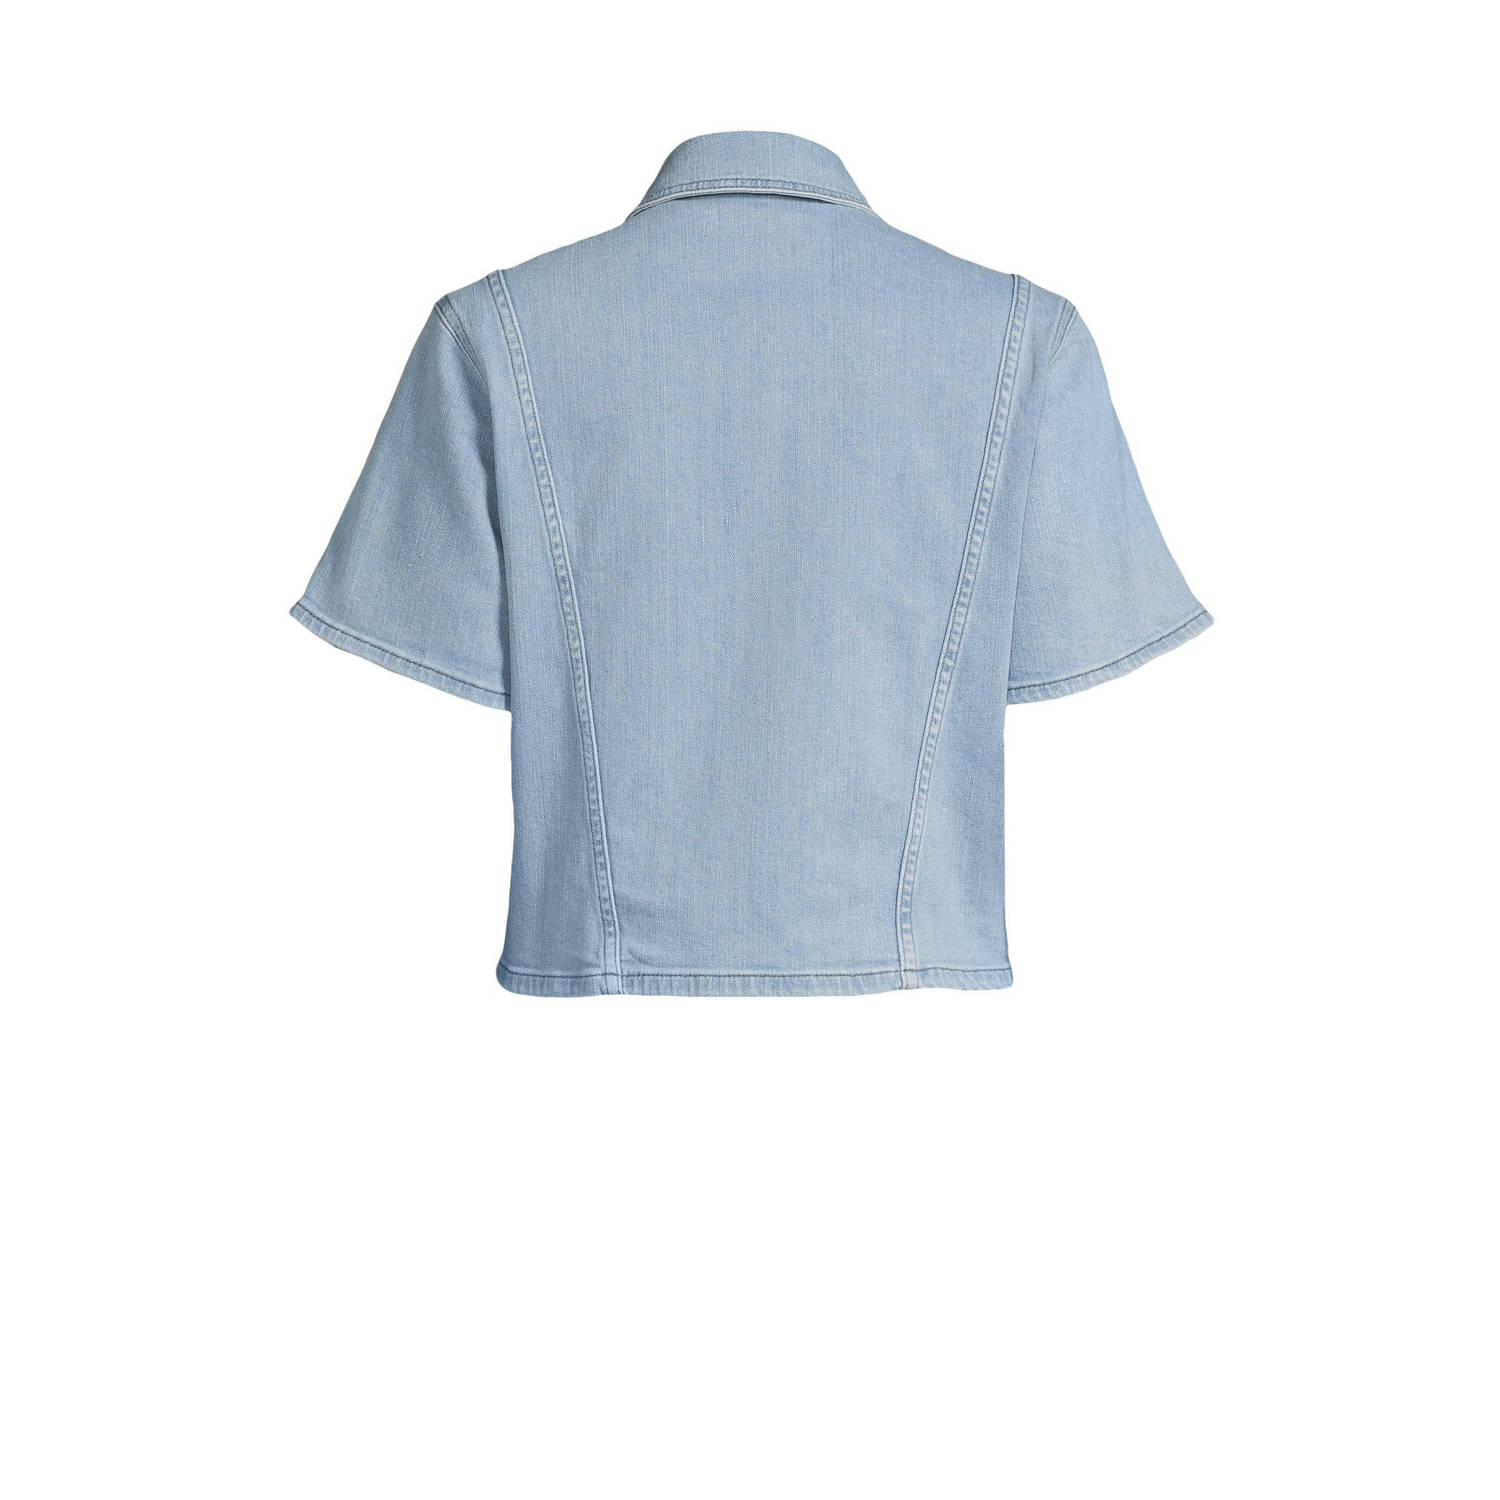 Another-Label denim blouse light blue denim